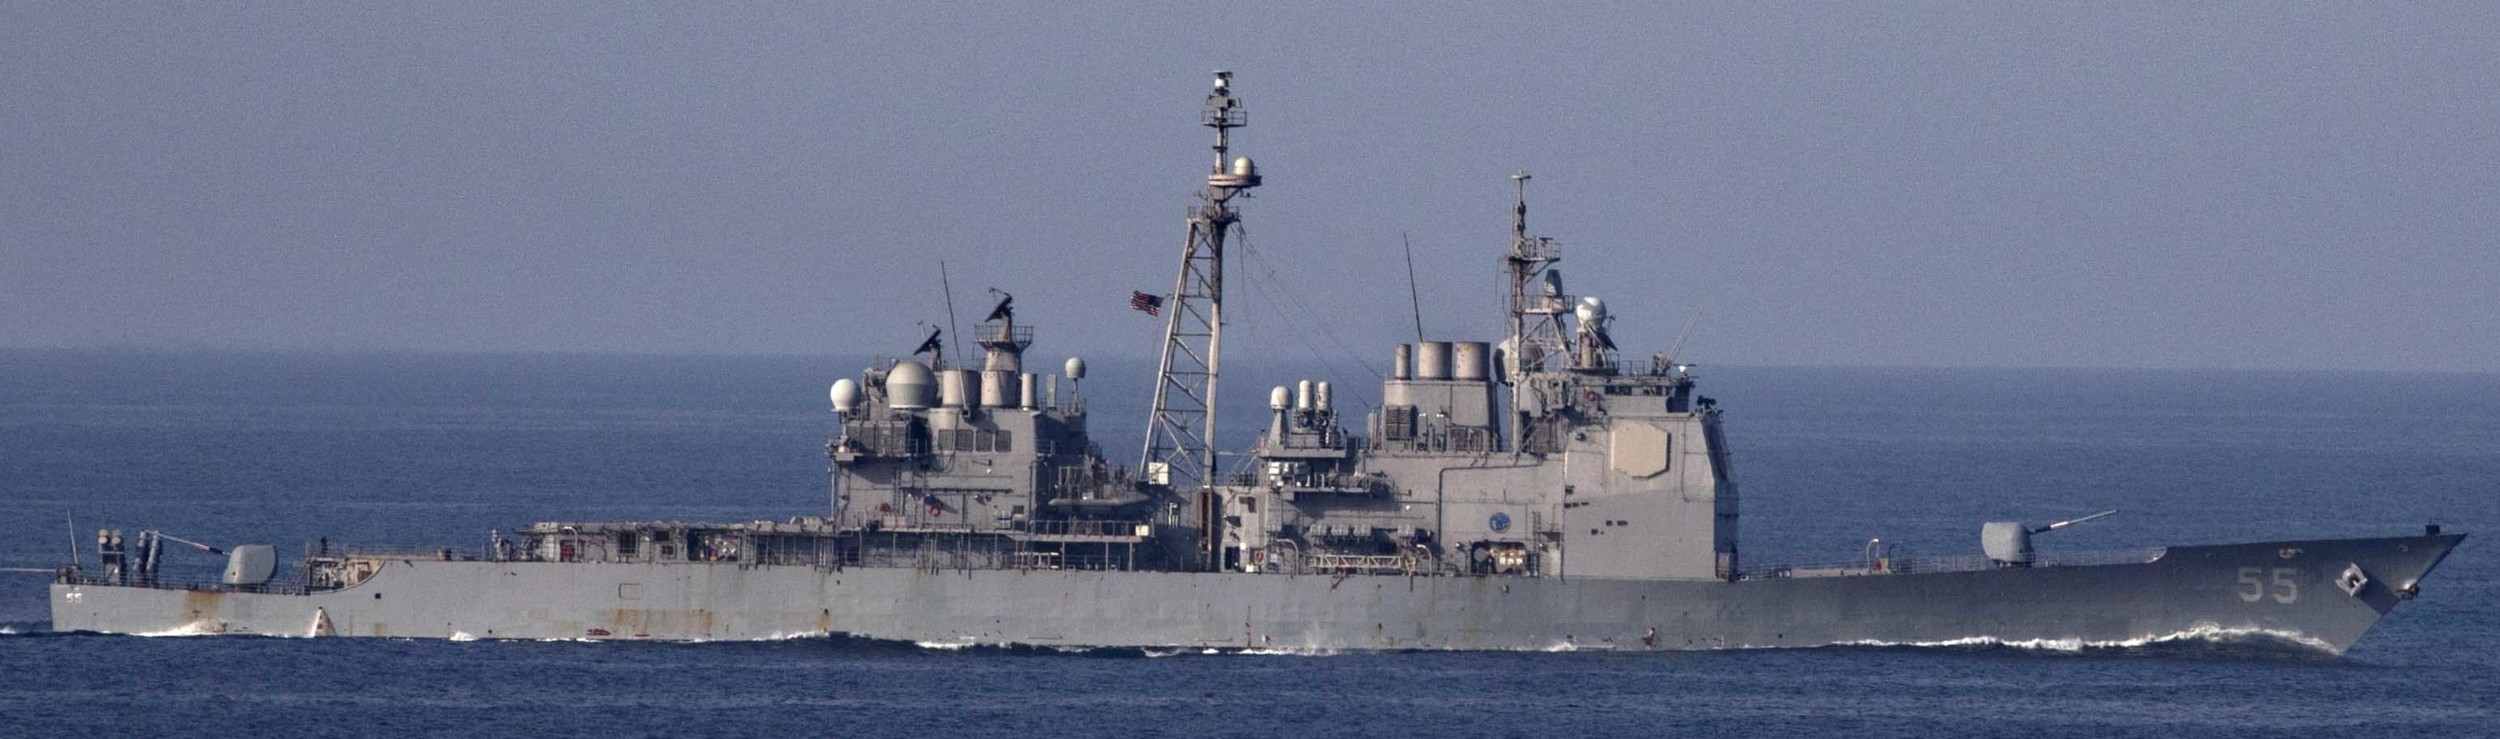 cg-55 uss leyte gulf ticonderoga class guided missile cruiser aegis us navy red sea